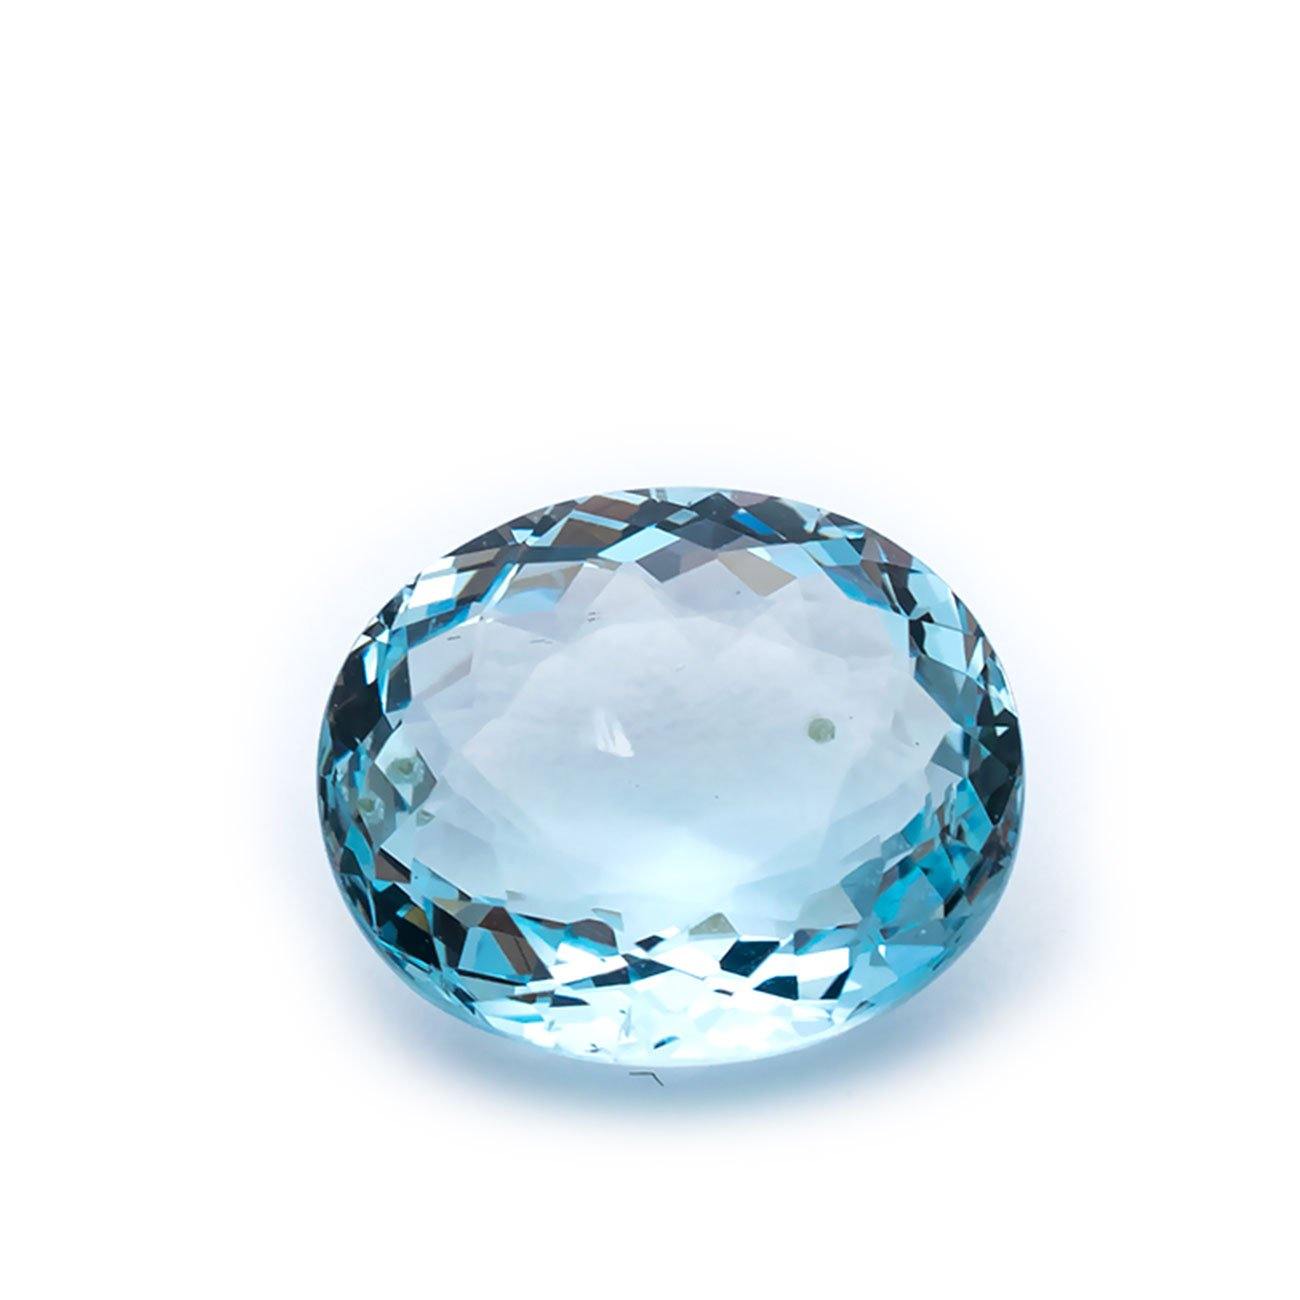 3.73 Carats Blue Natural Aquamarine Genuine Gemstone Oval Cut - Modern Gem Jewelry 